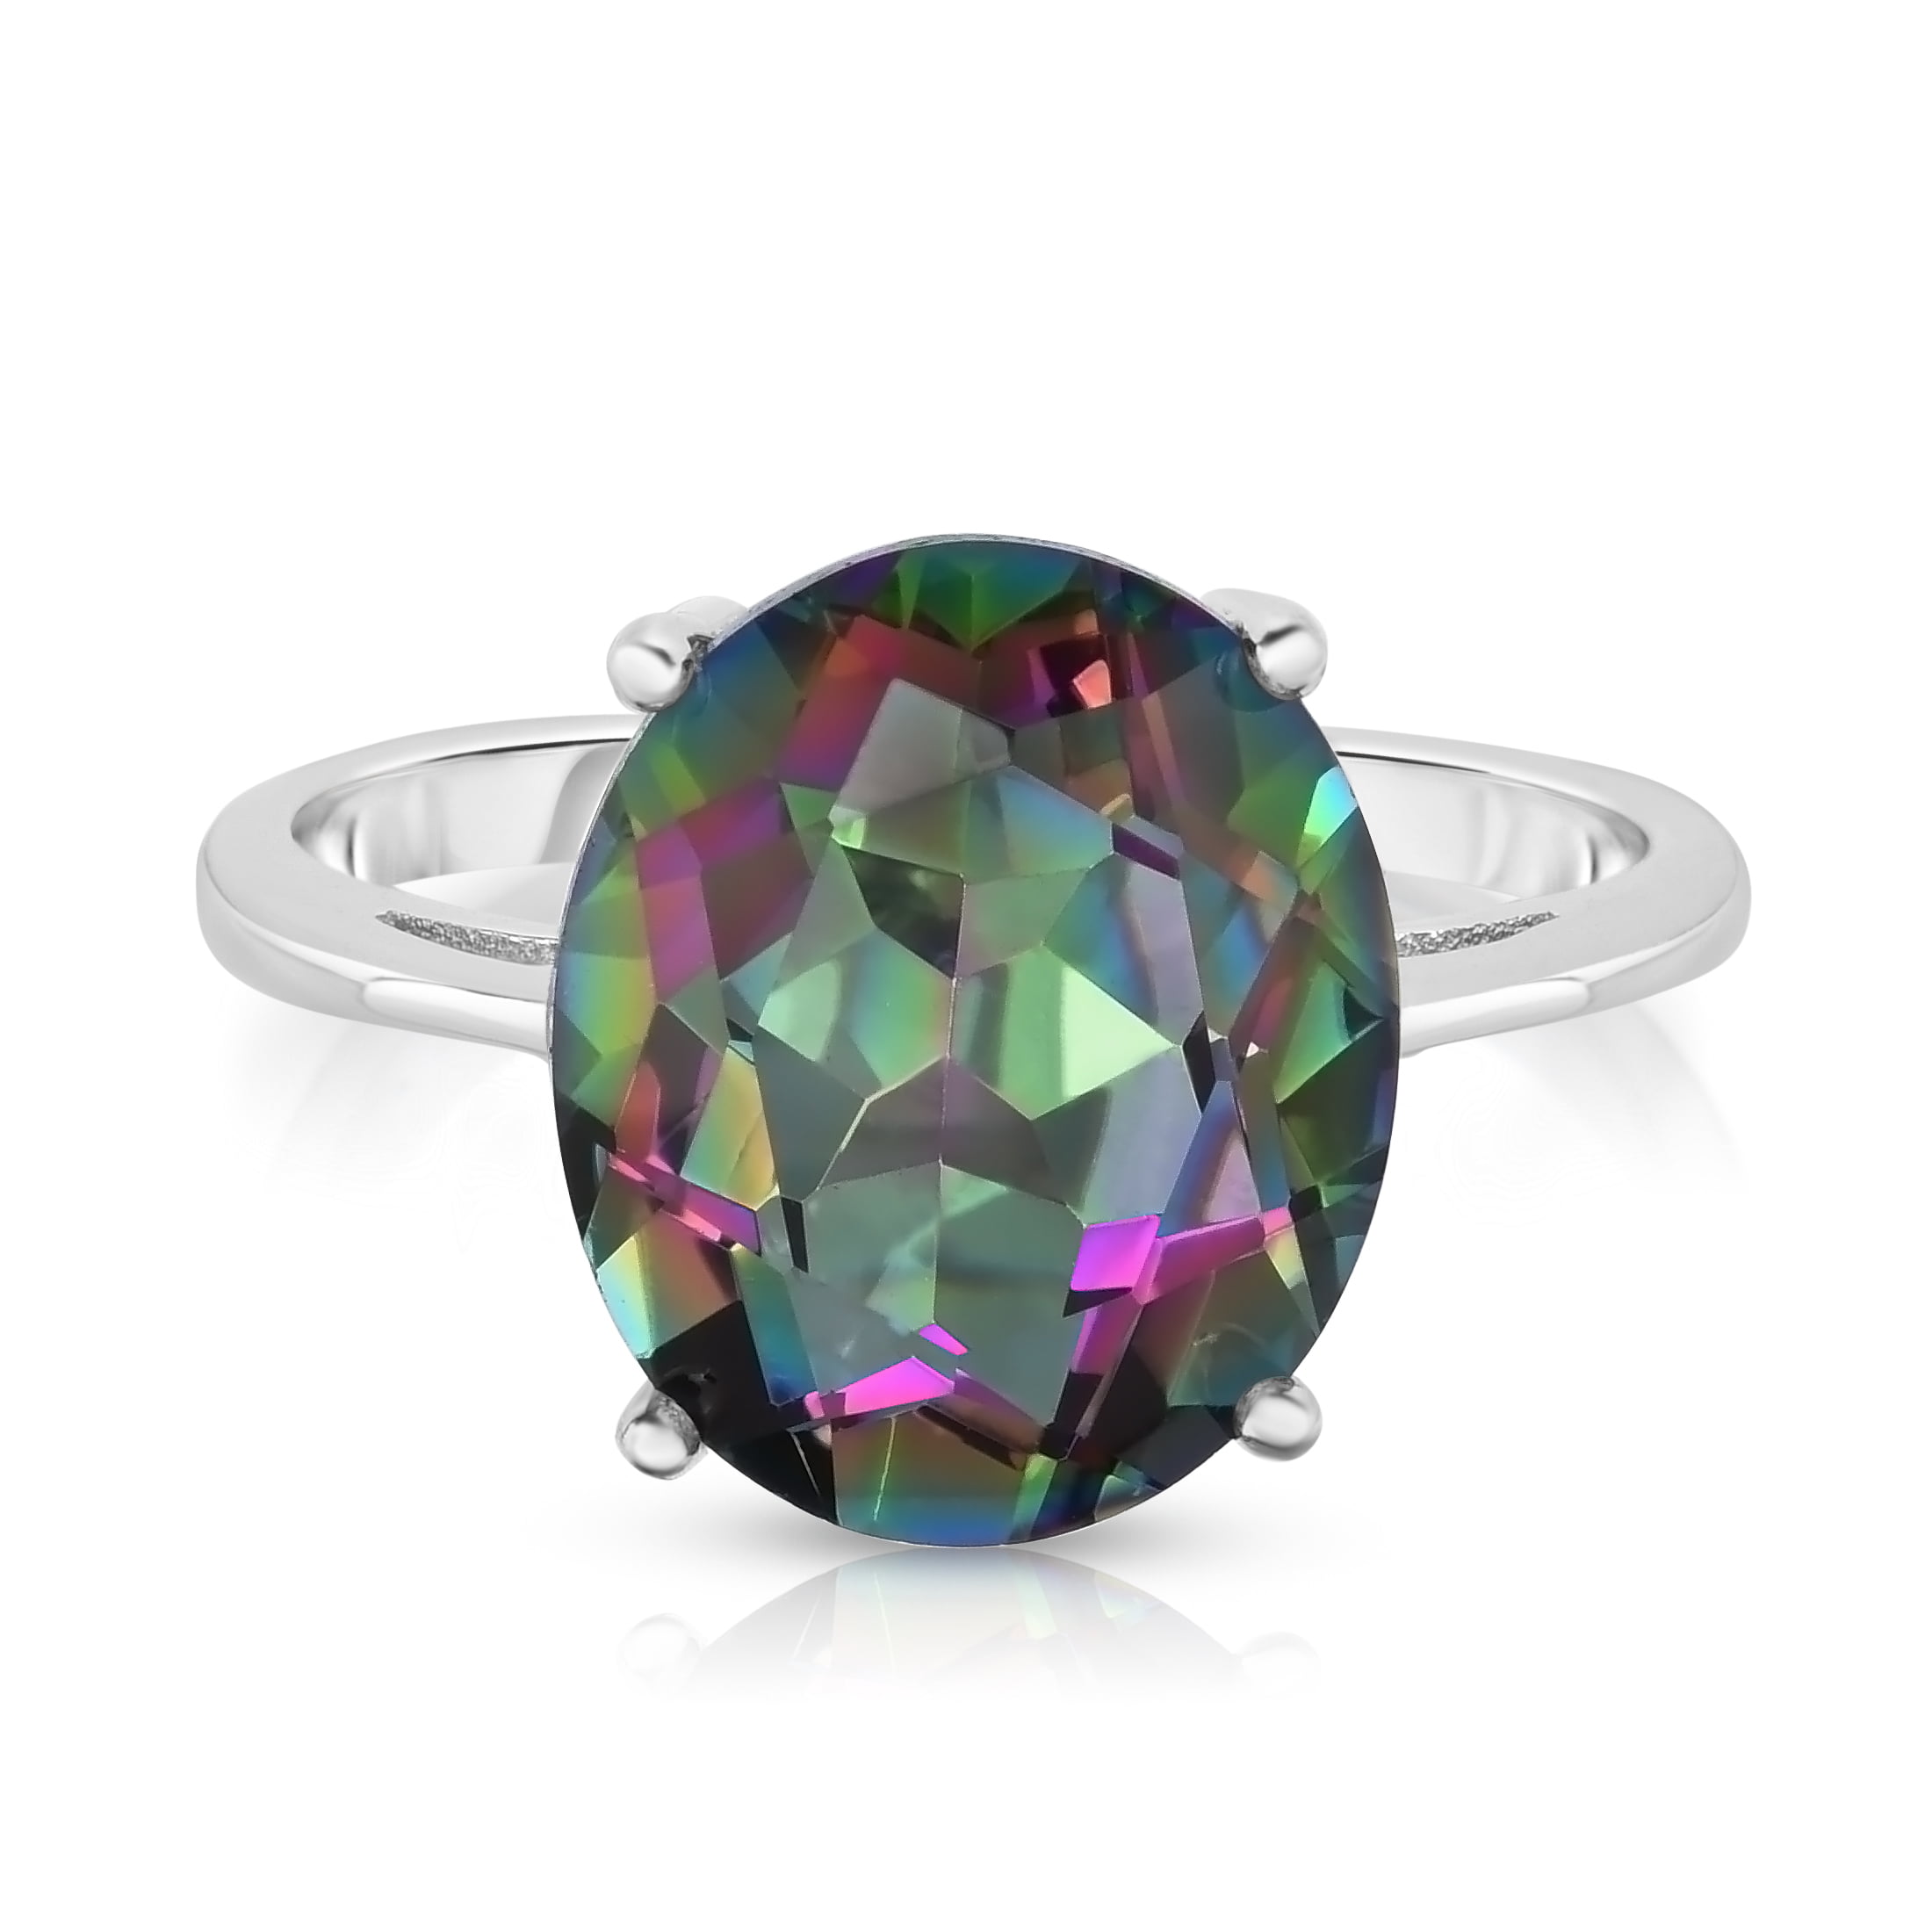 Nice New Fashion Jewelry Oval Rainbow Gemstone Silver Ring Size 6 7 8 9 10 11 12